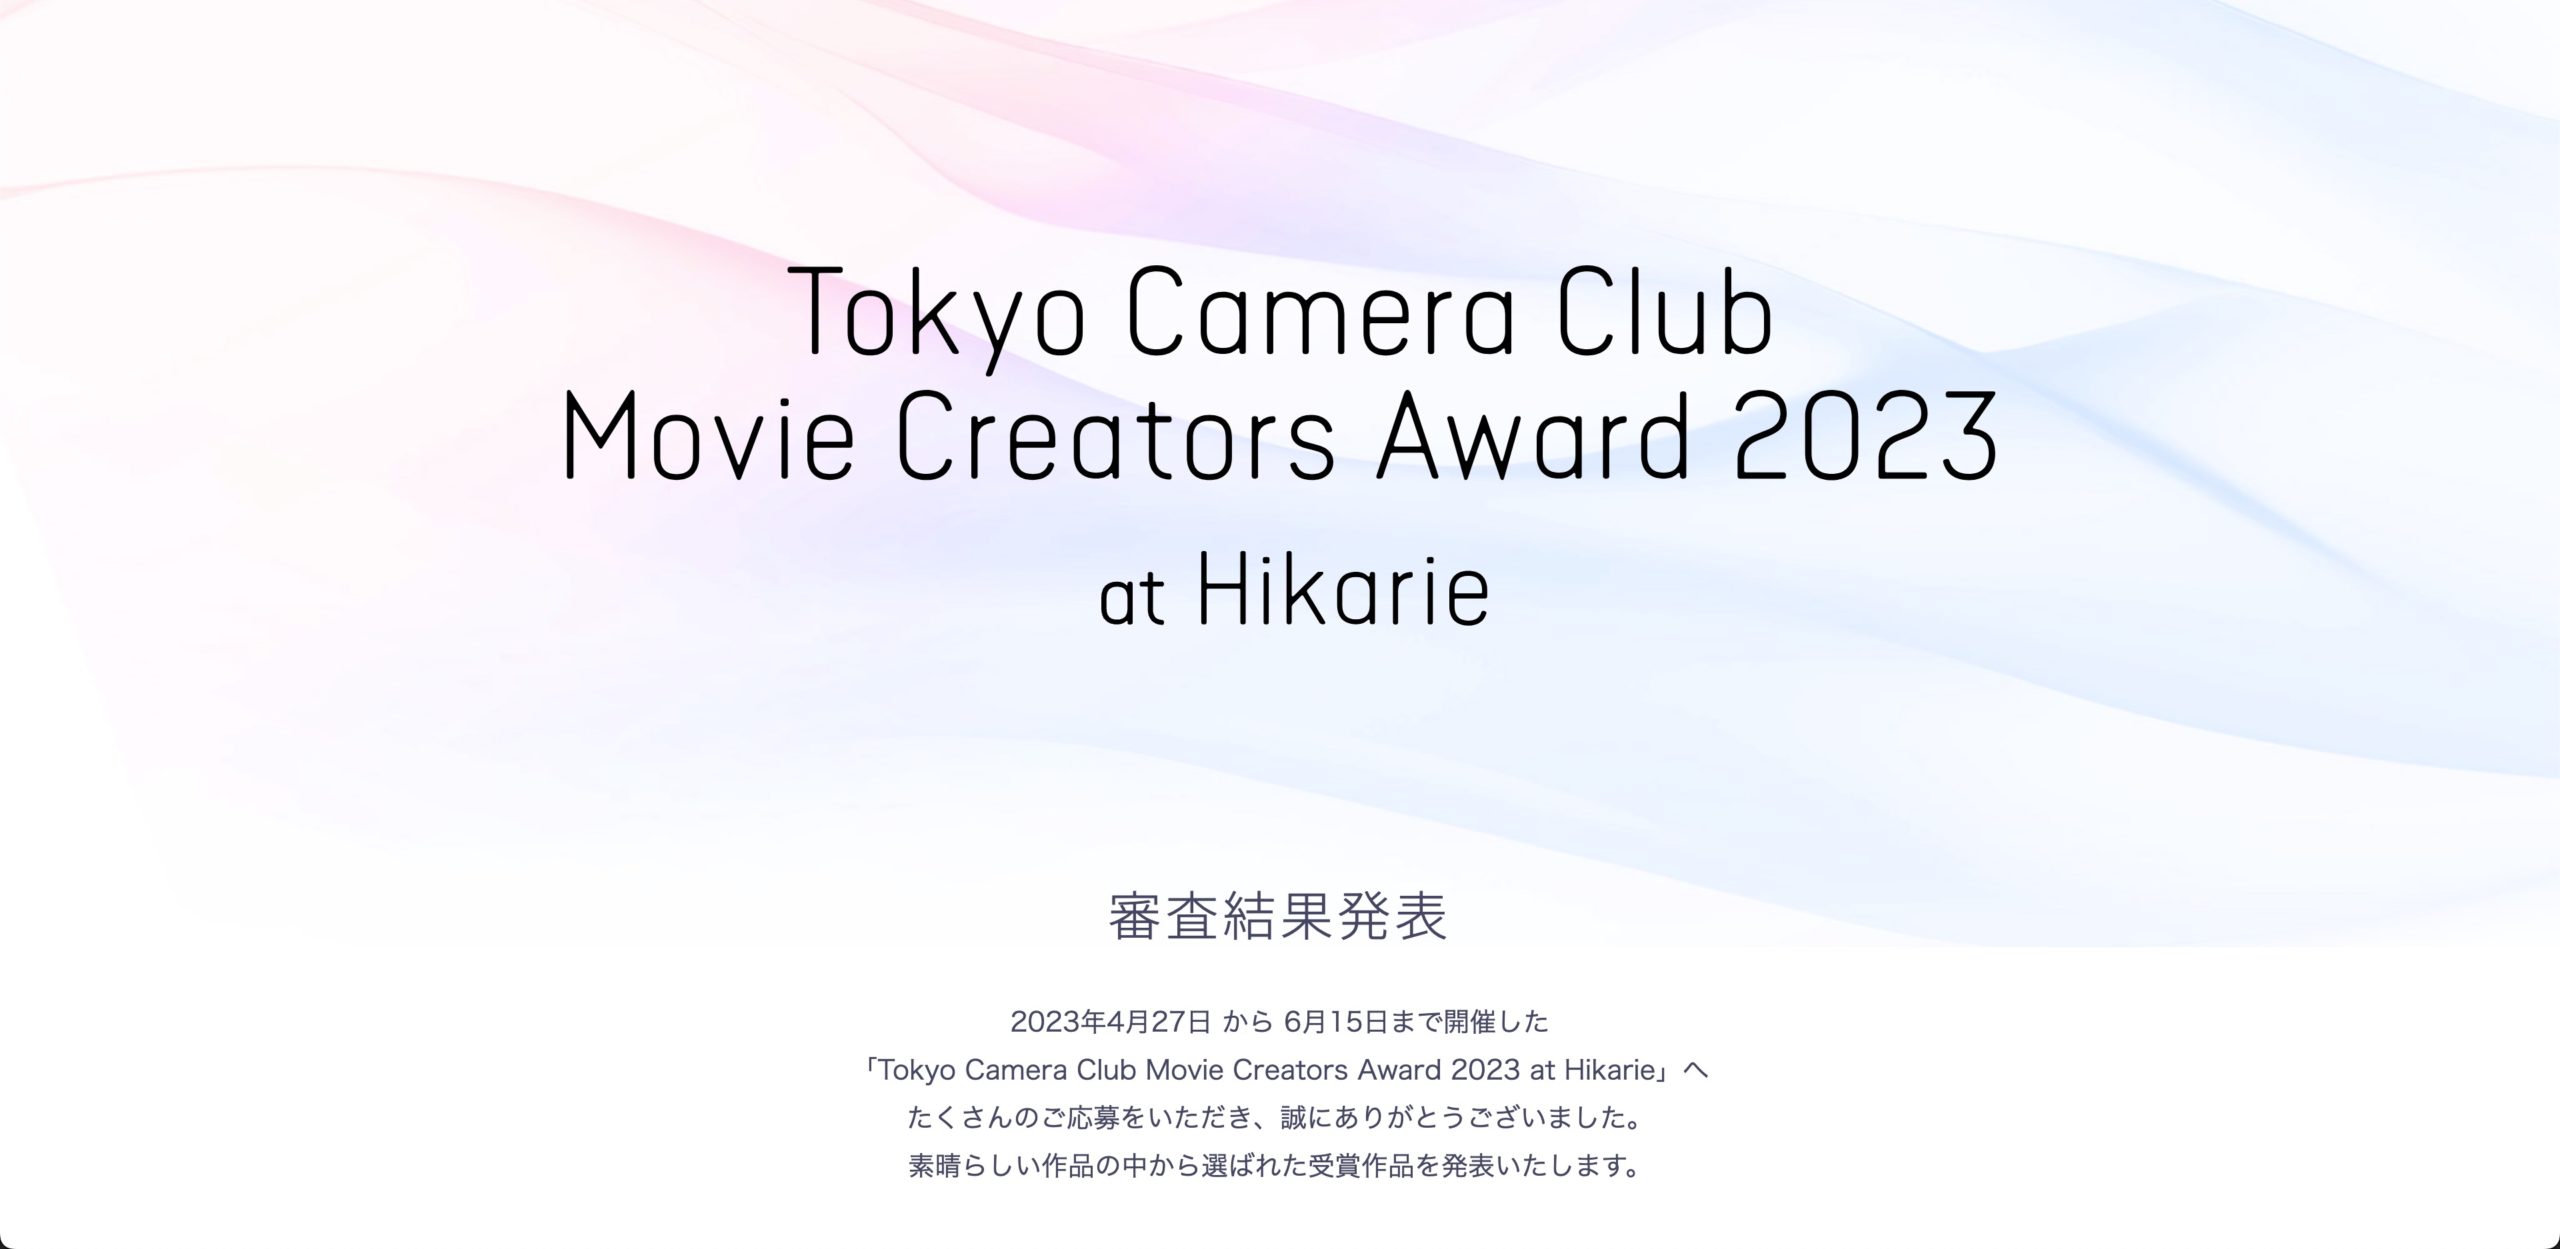 『Tokyo Camera Club Movie Creators Award 2023 at Hikarie』結果発表サイト